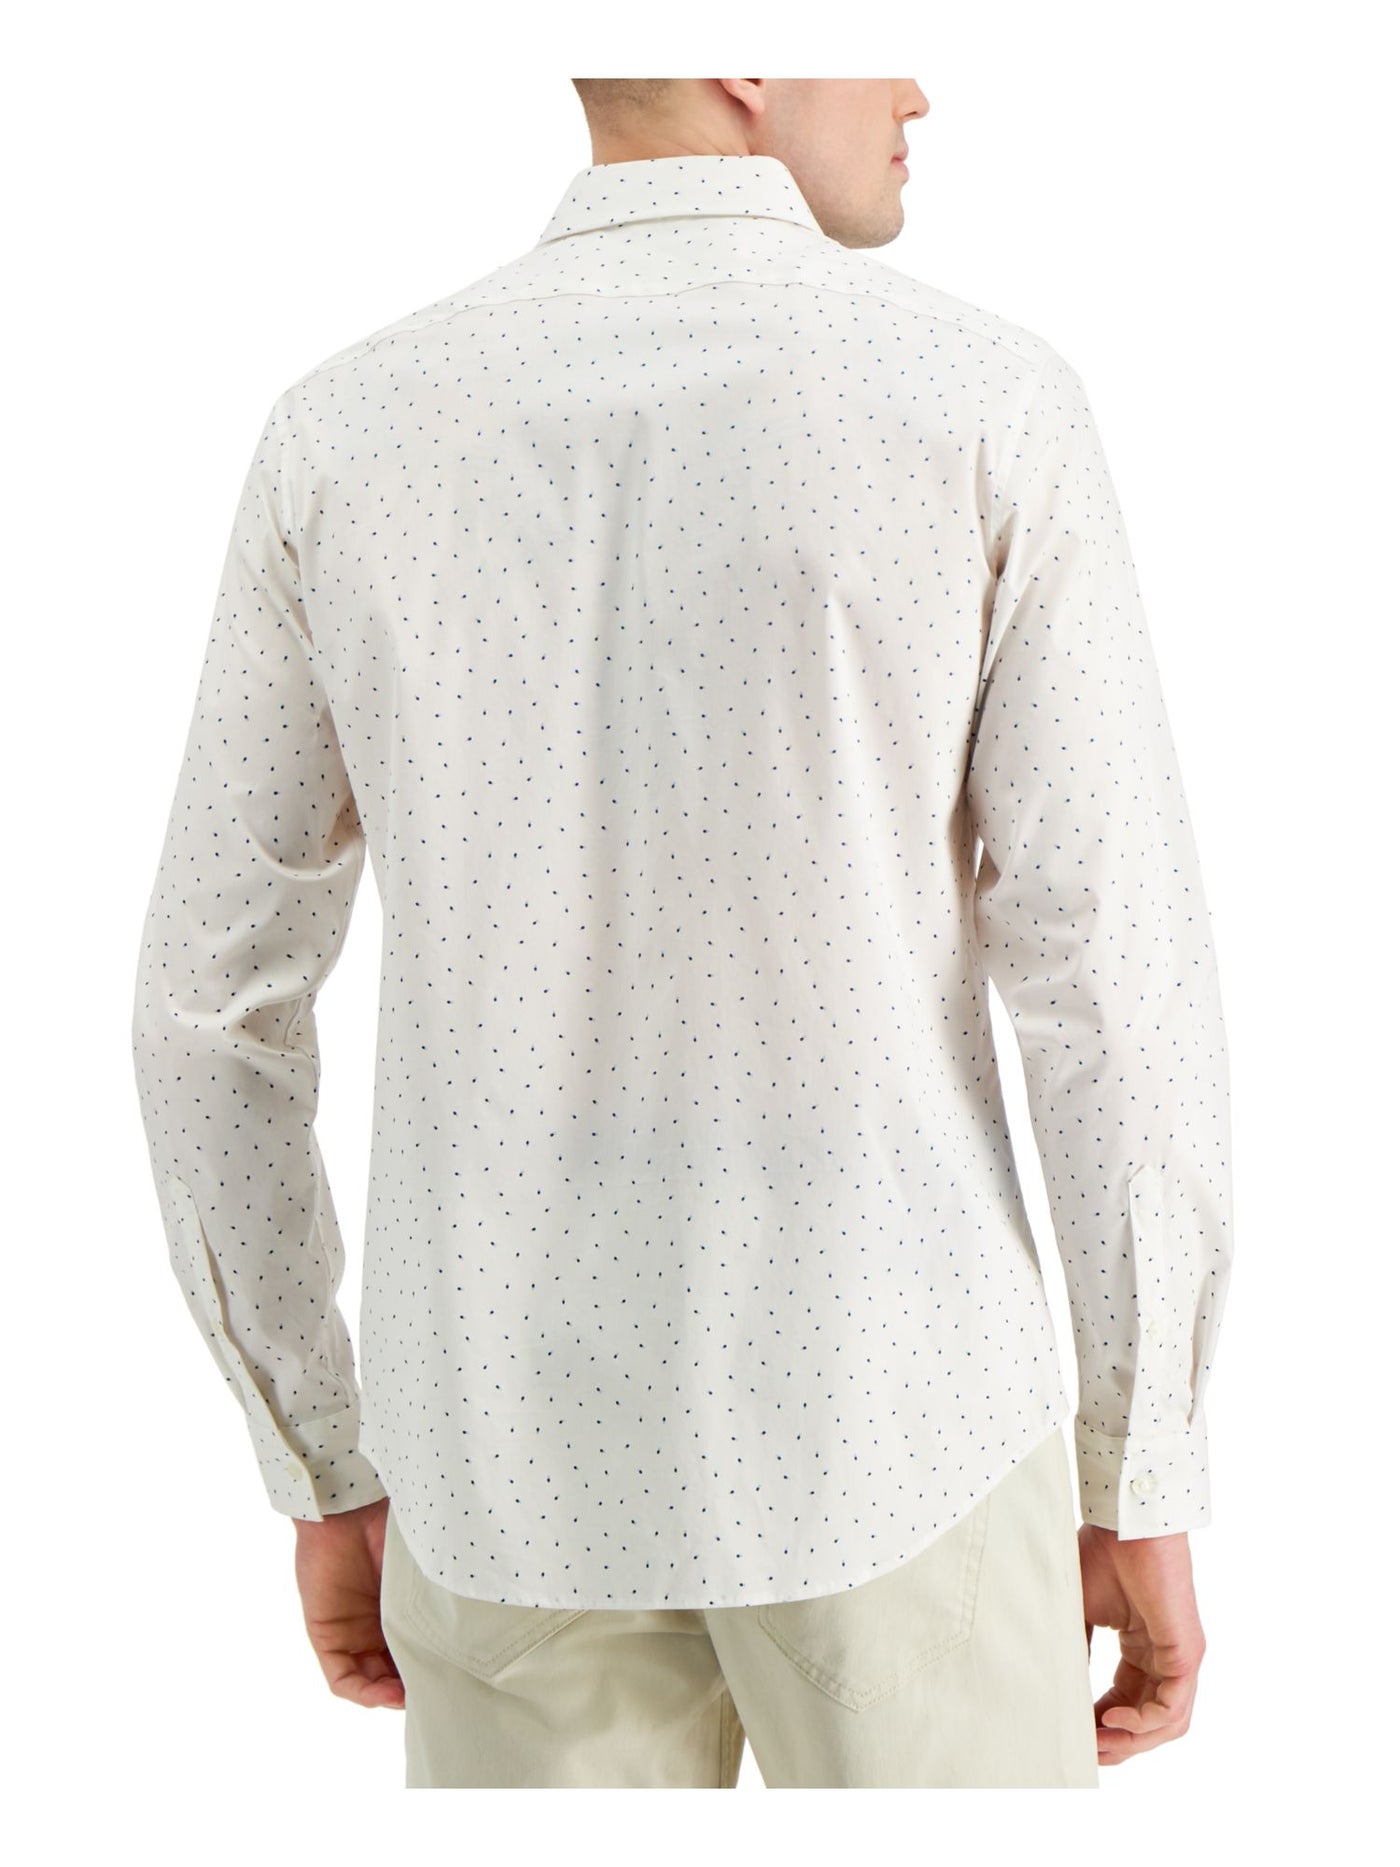 MICHAEL KORS Mens White Slim Fit Button Down Performance Stretch Casual Shirt XXL